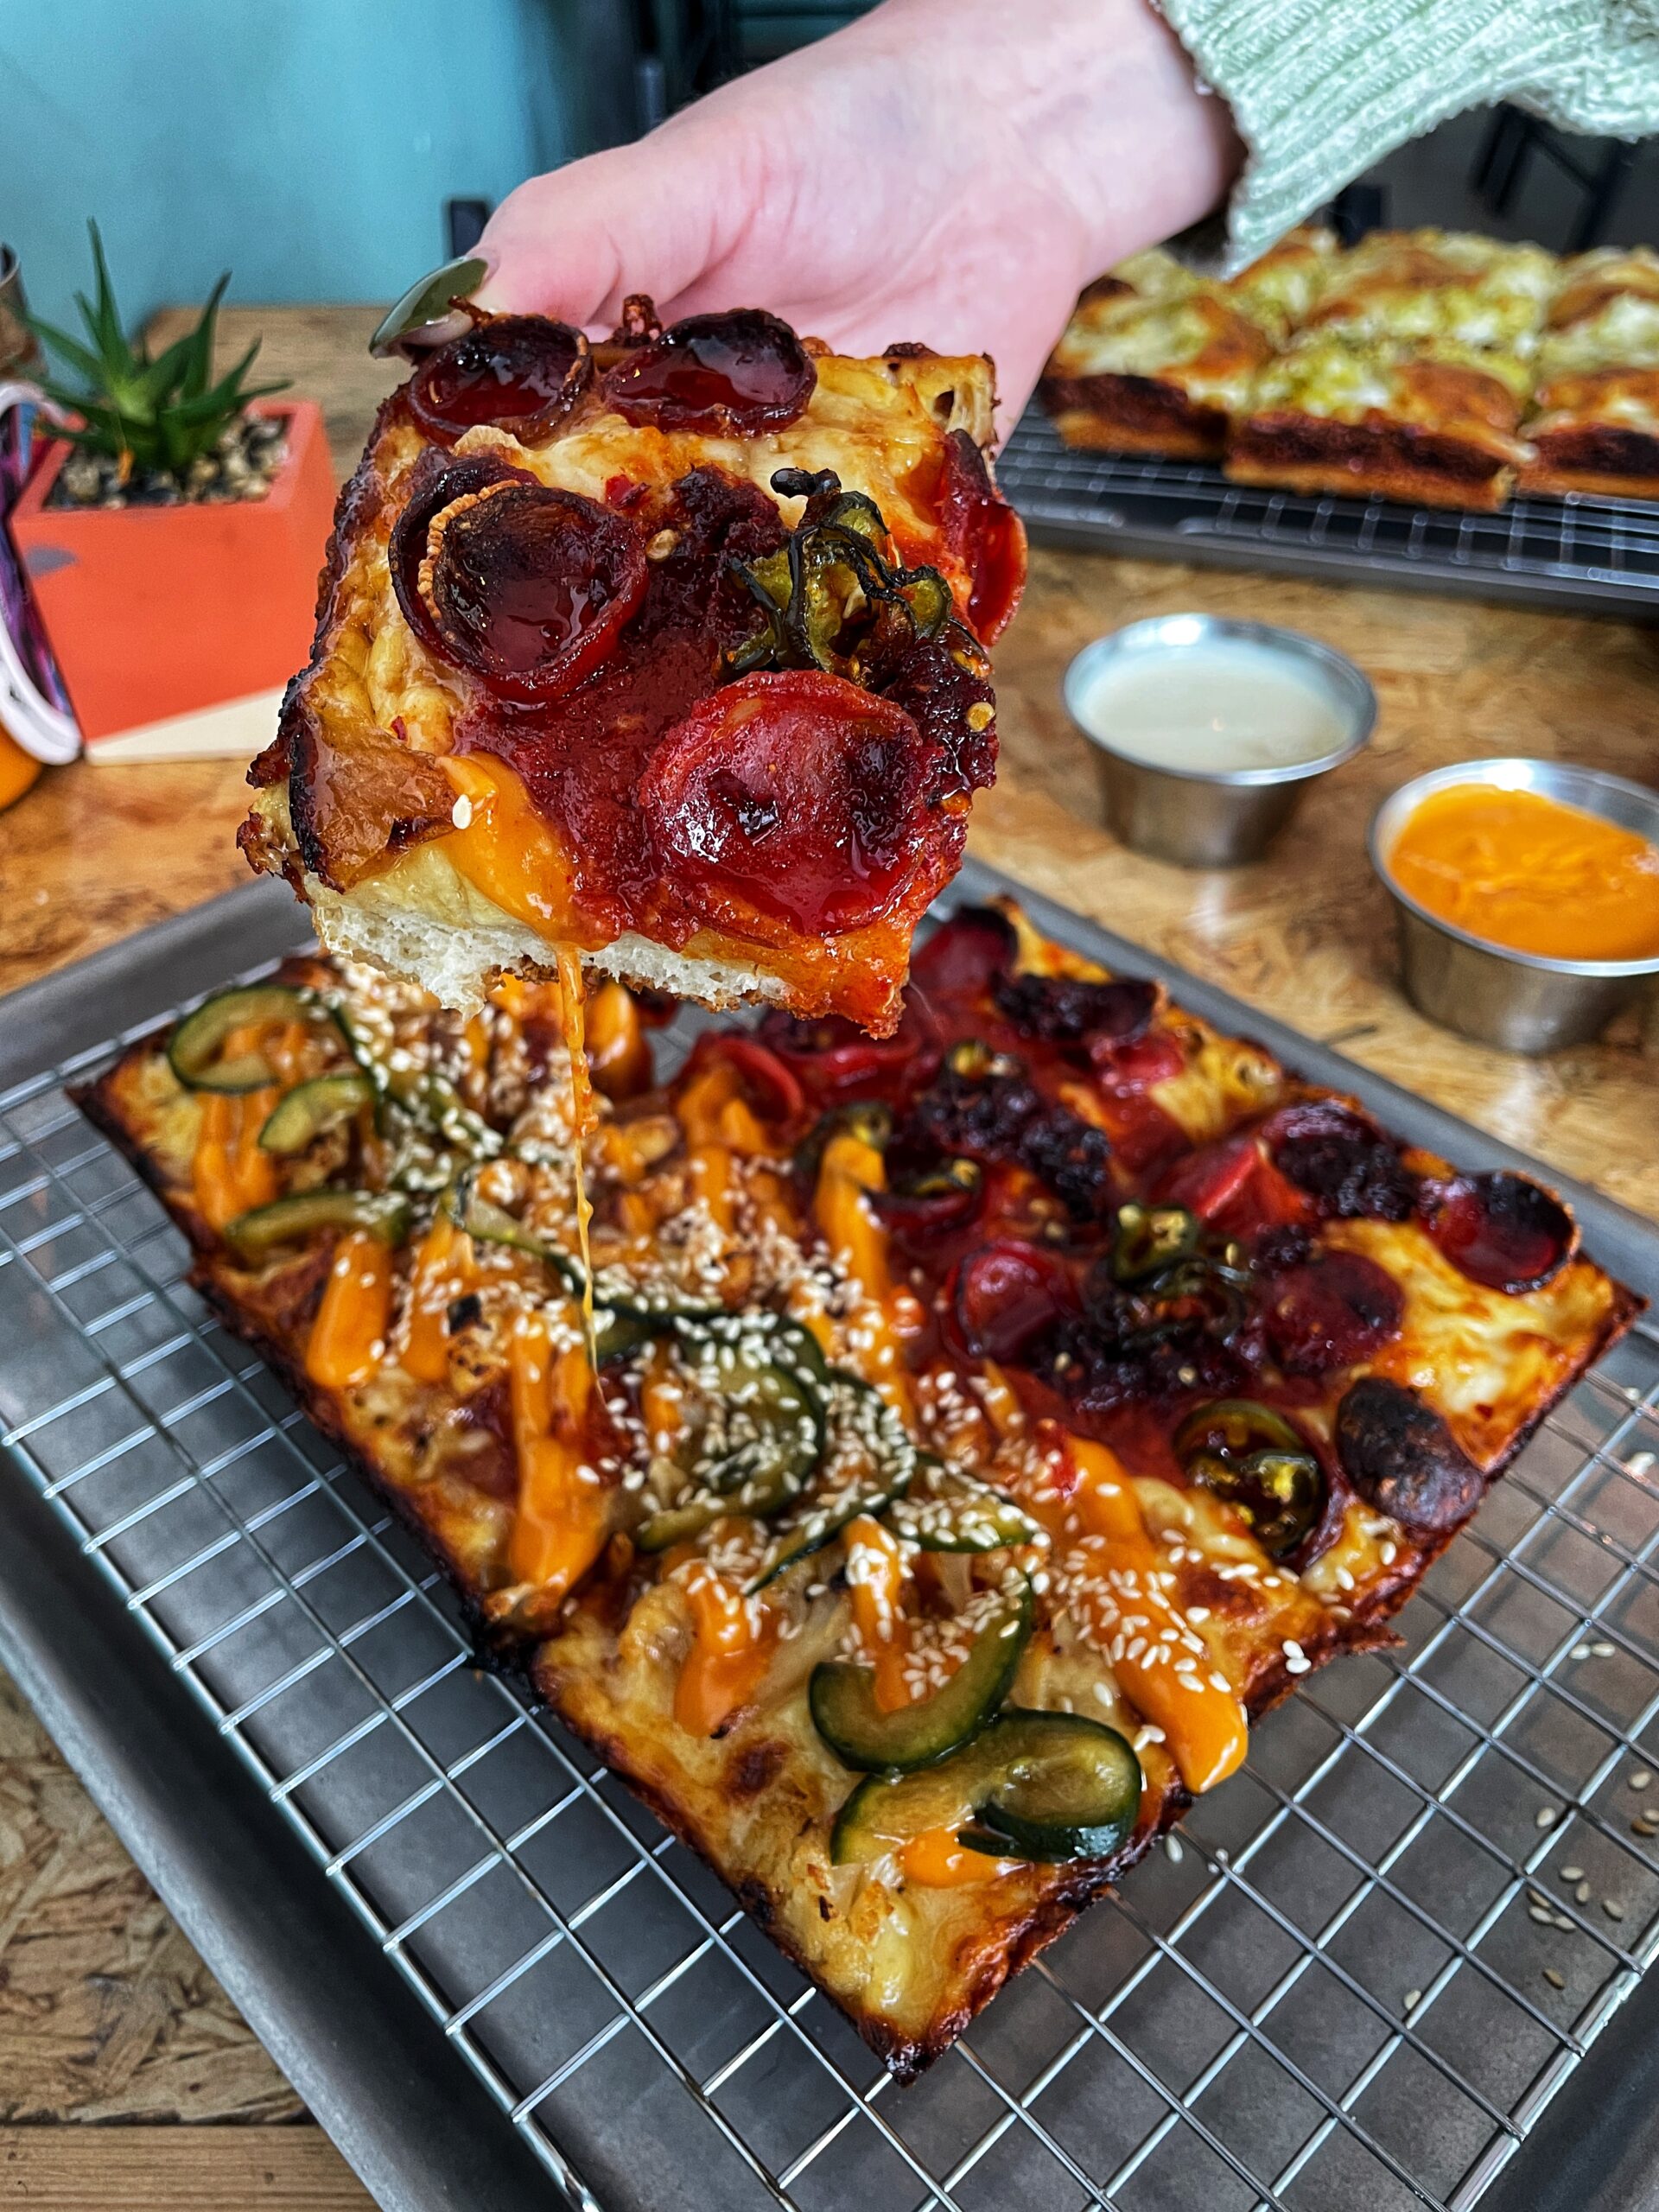 Half-and-half Detroit-style pizza at Corner Slice